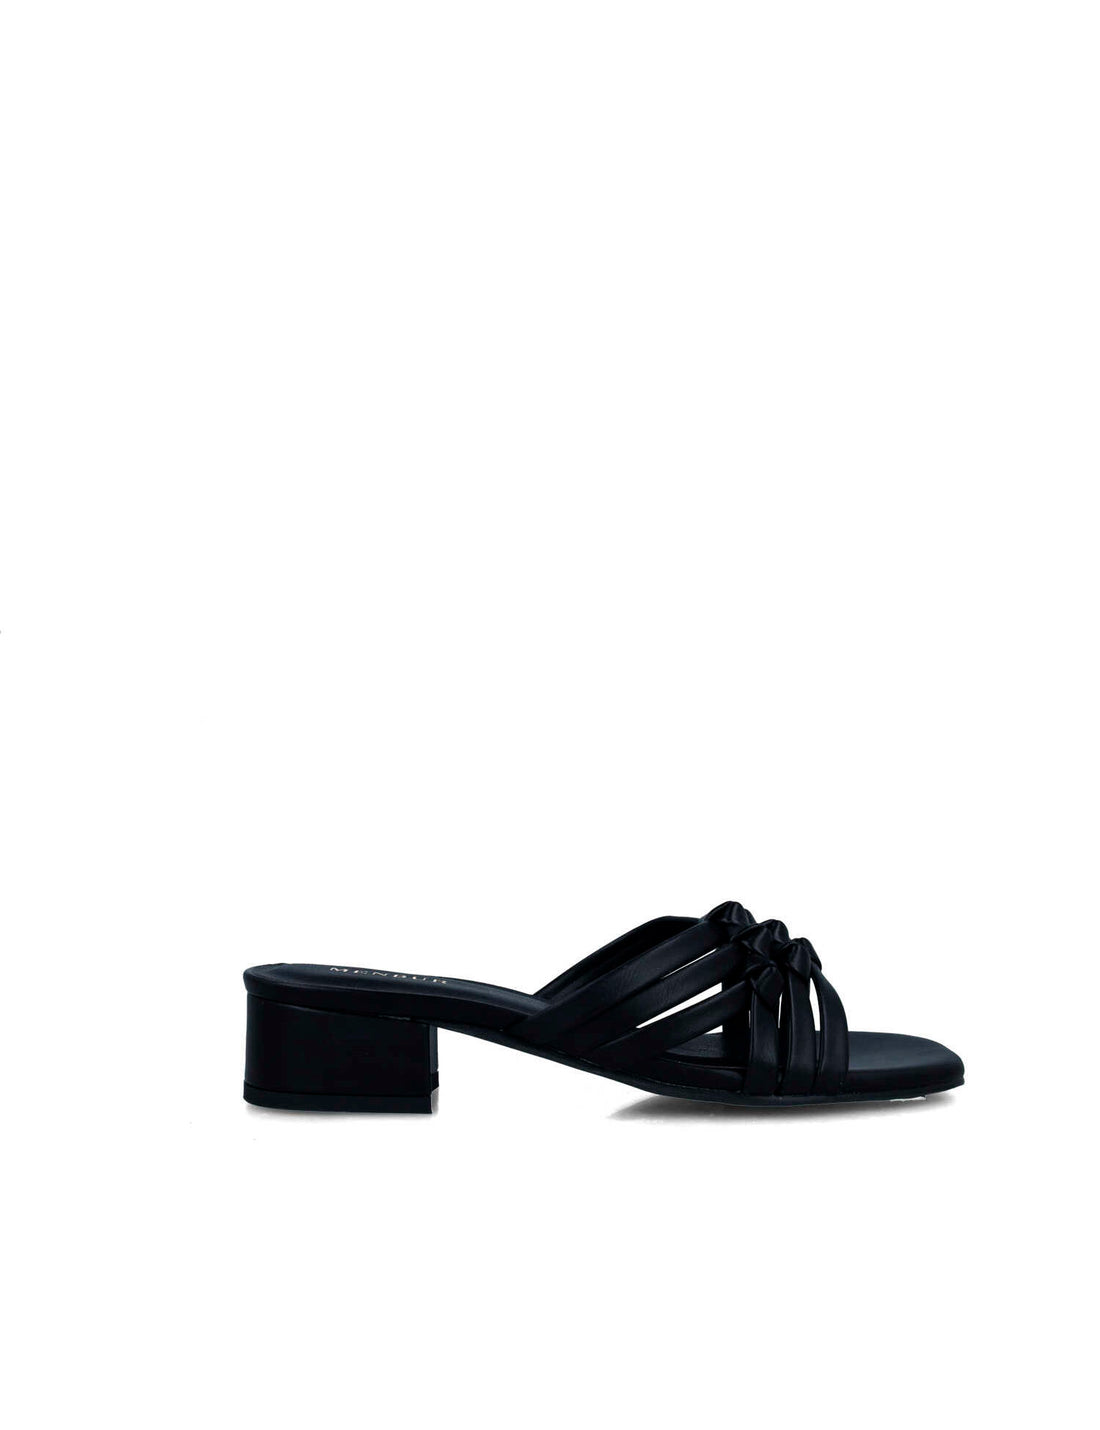 Black Slippers With Kitten Heel_25568_01_01